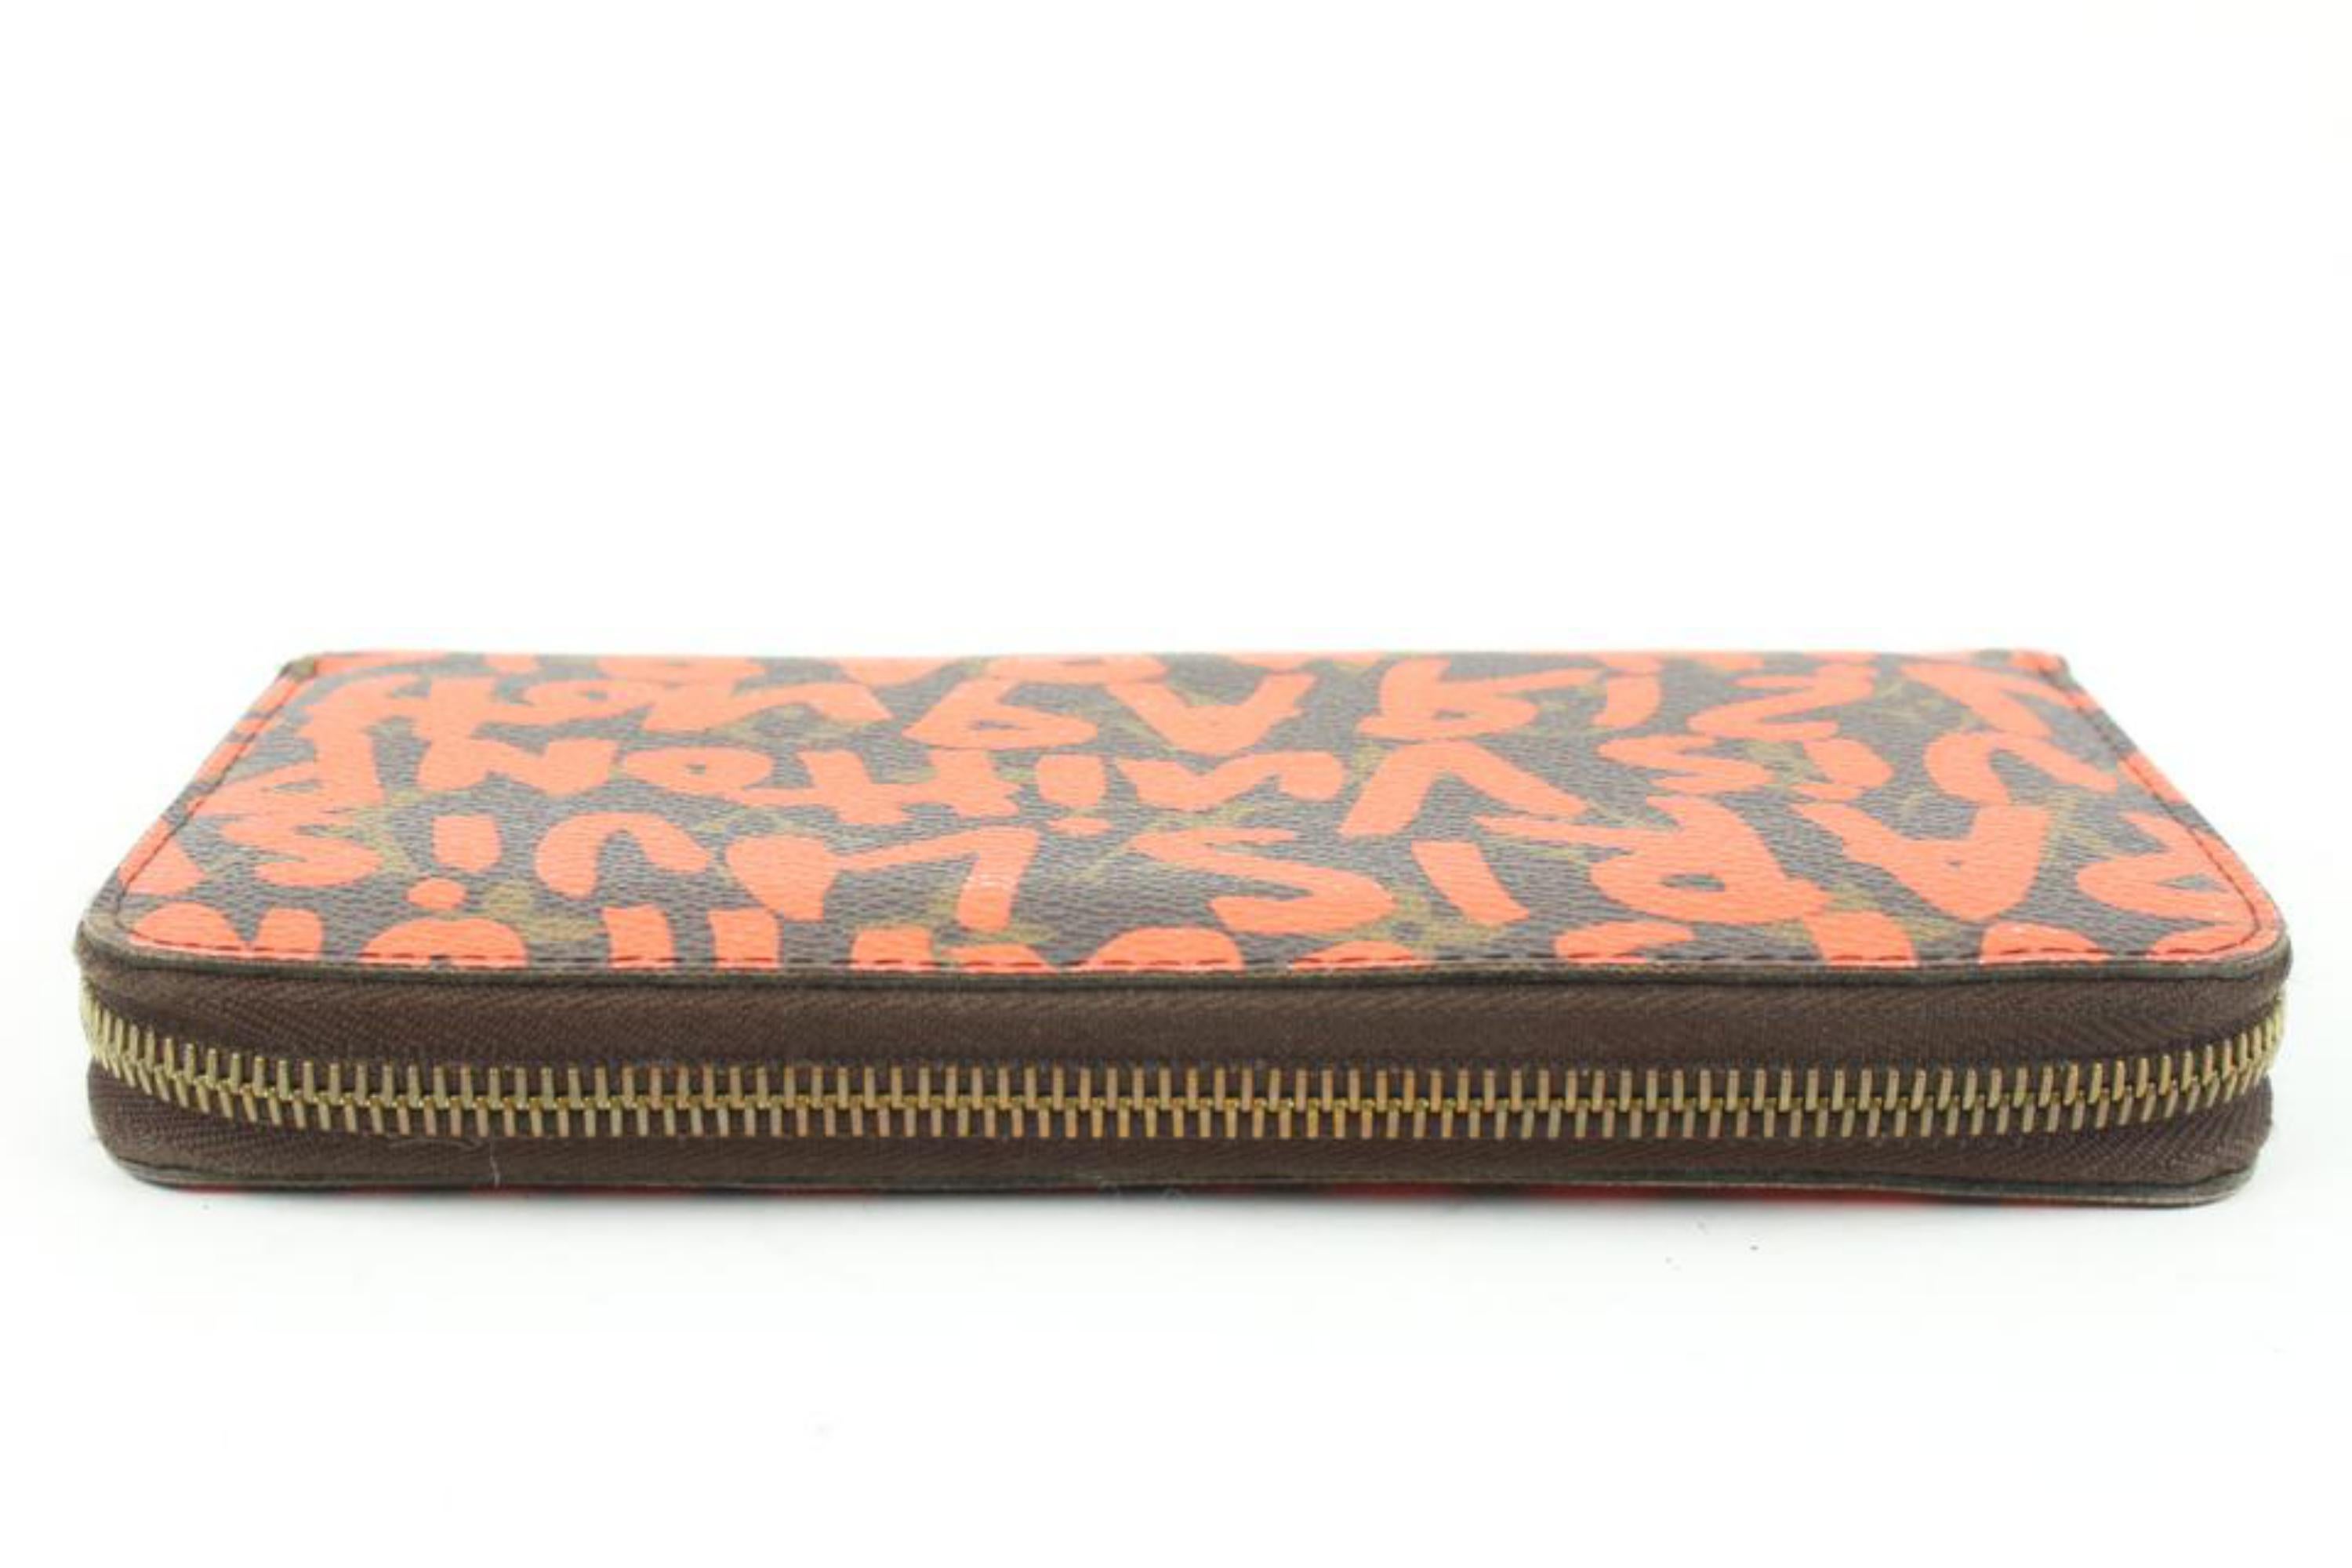 Louis Vuitton Stephen Sprouse Orange Graffiti Zippy Wallet Long Zip Around 118lv36
Date Code/Serial Number: CA0069
Made In: Spain
Measurements: Length:  7.6